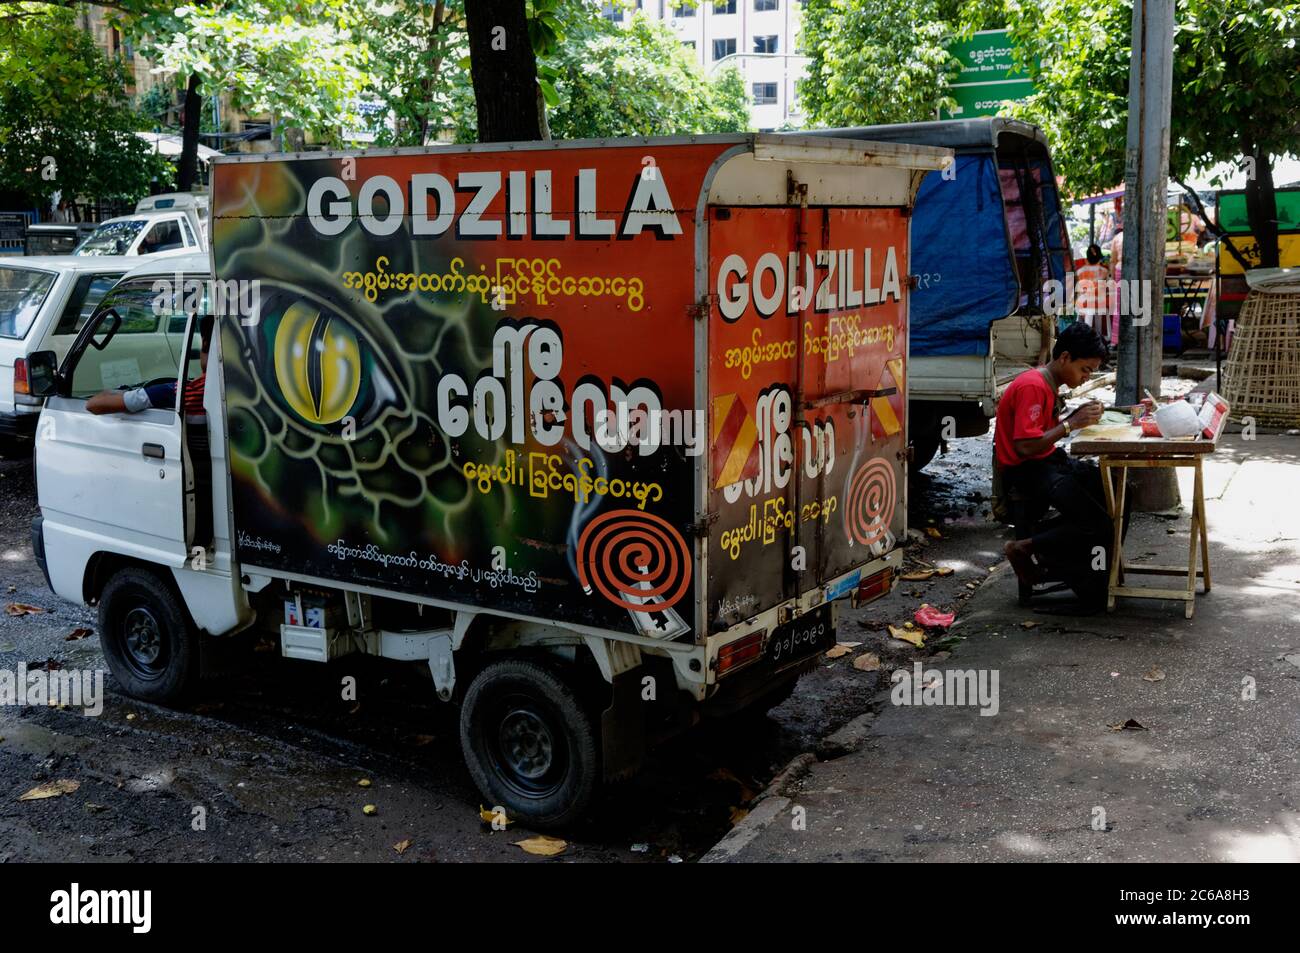 Godzilla delivery mini van near a hawker stall on the streets of Yangon, Myanmar. Asia Stock Photo